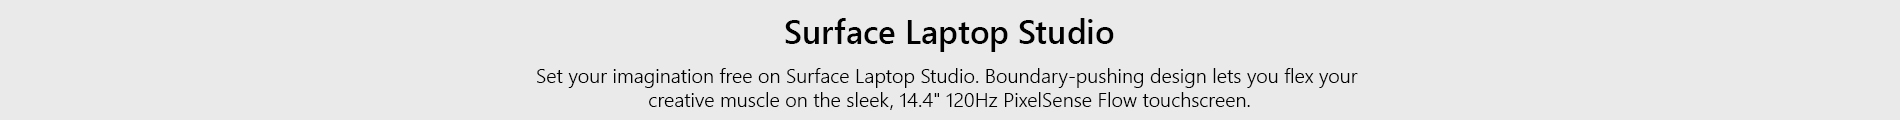 Microsoft Surface Header Landing Page 09.27.21 Tile 05